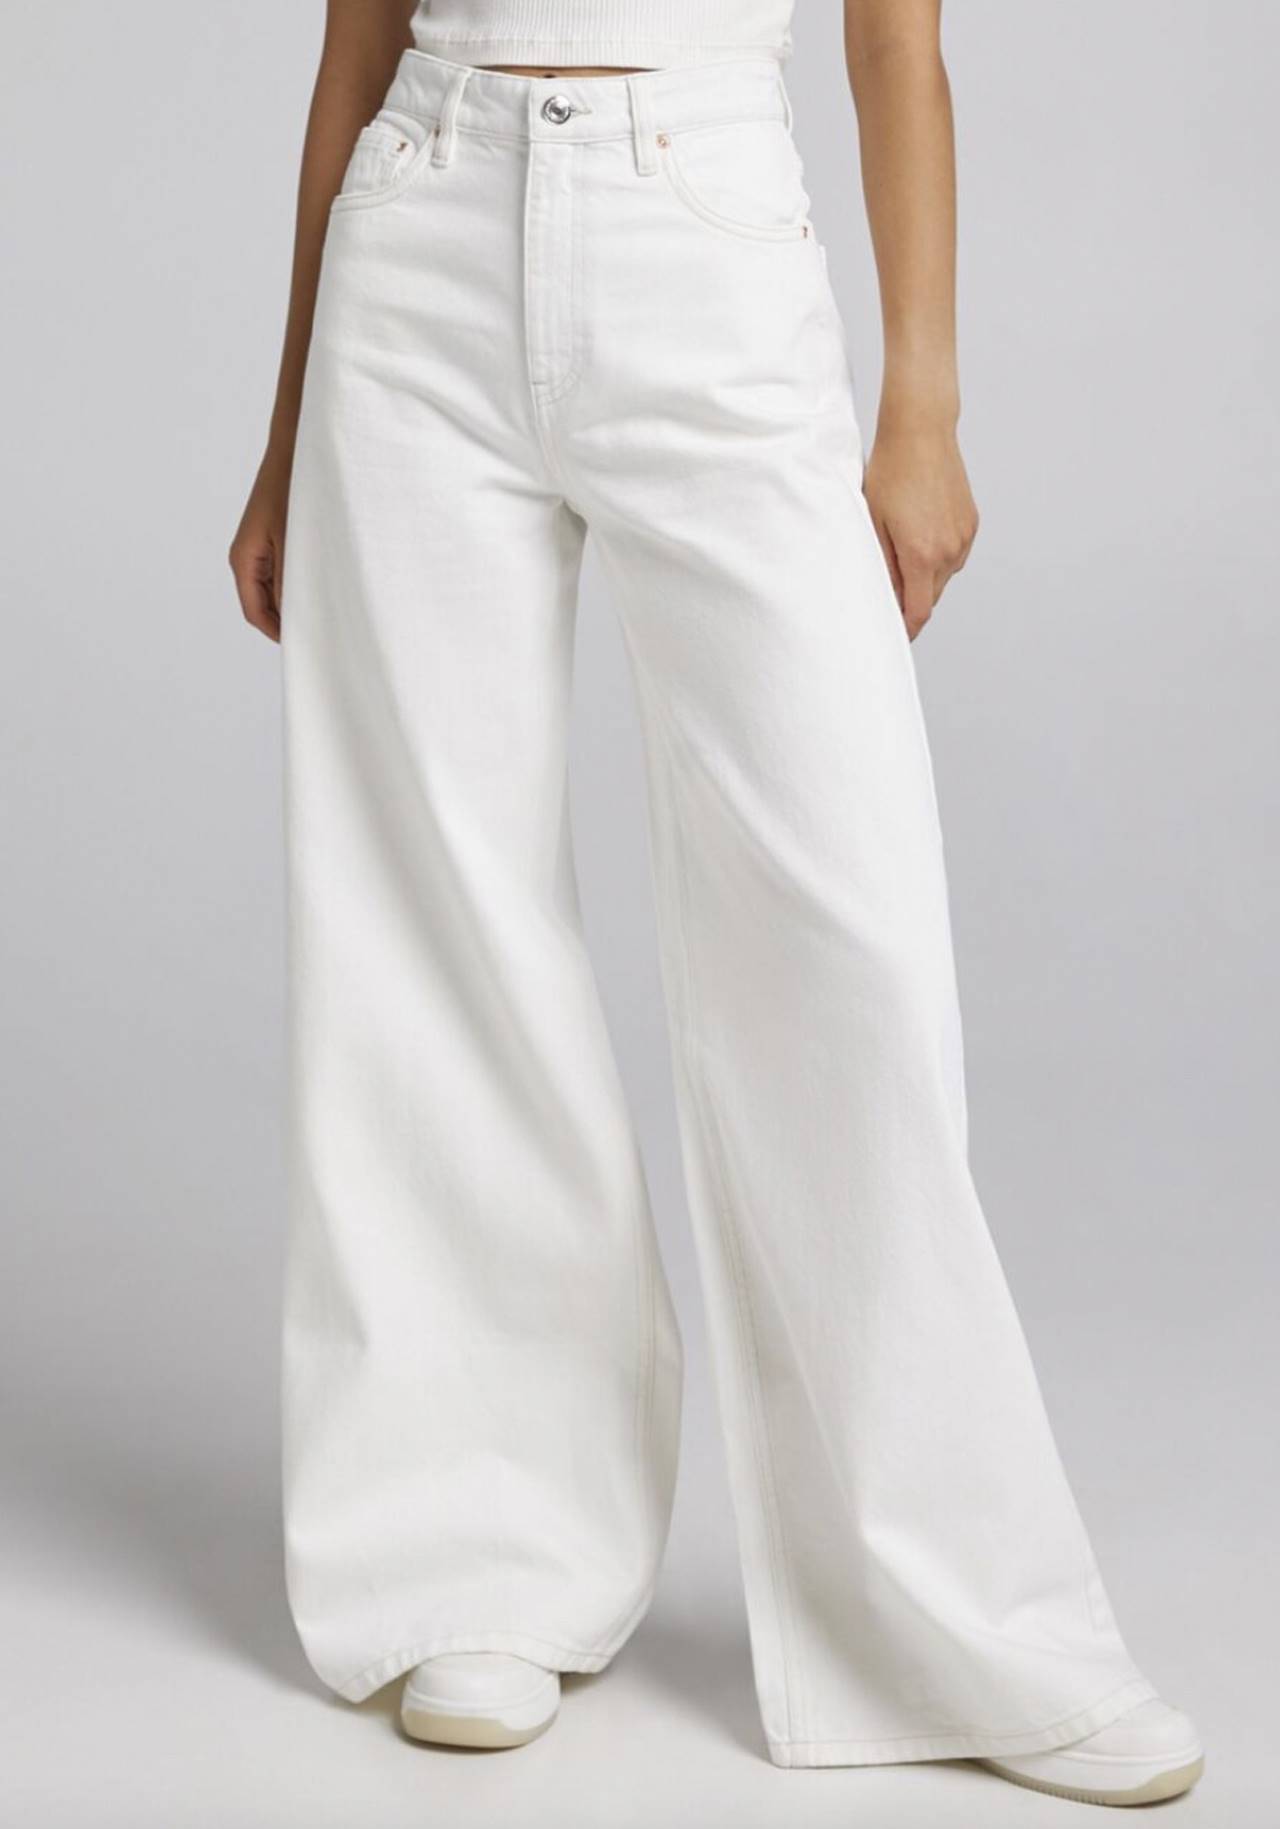 pantalones blancos Zara